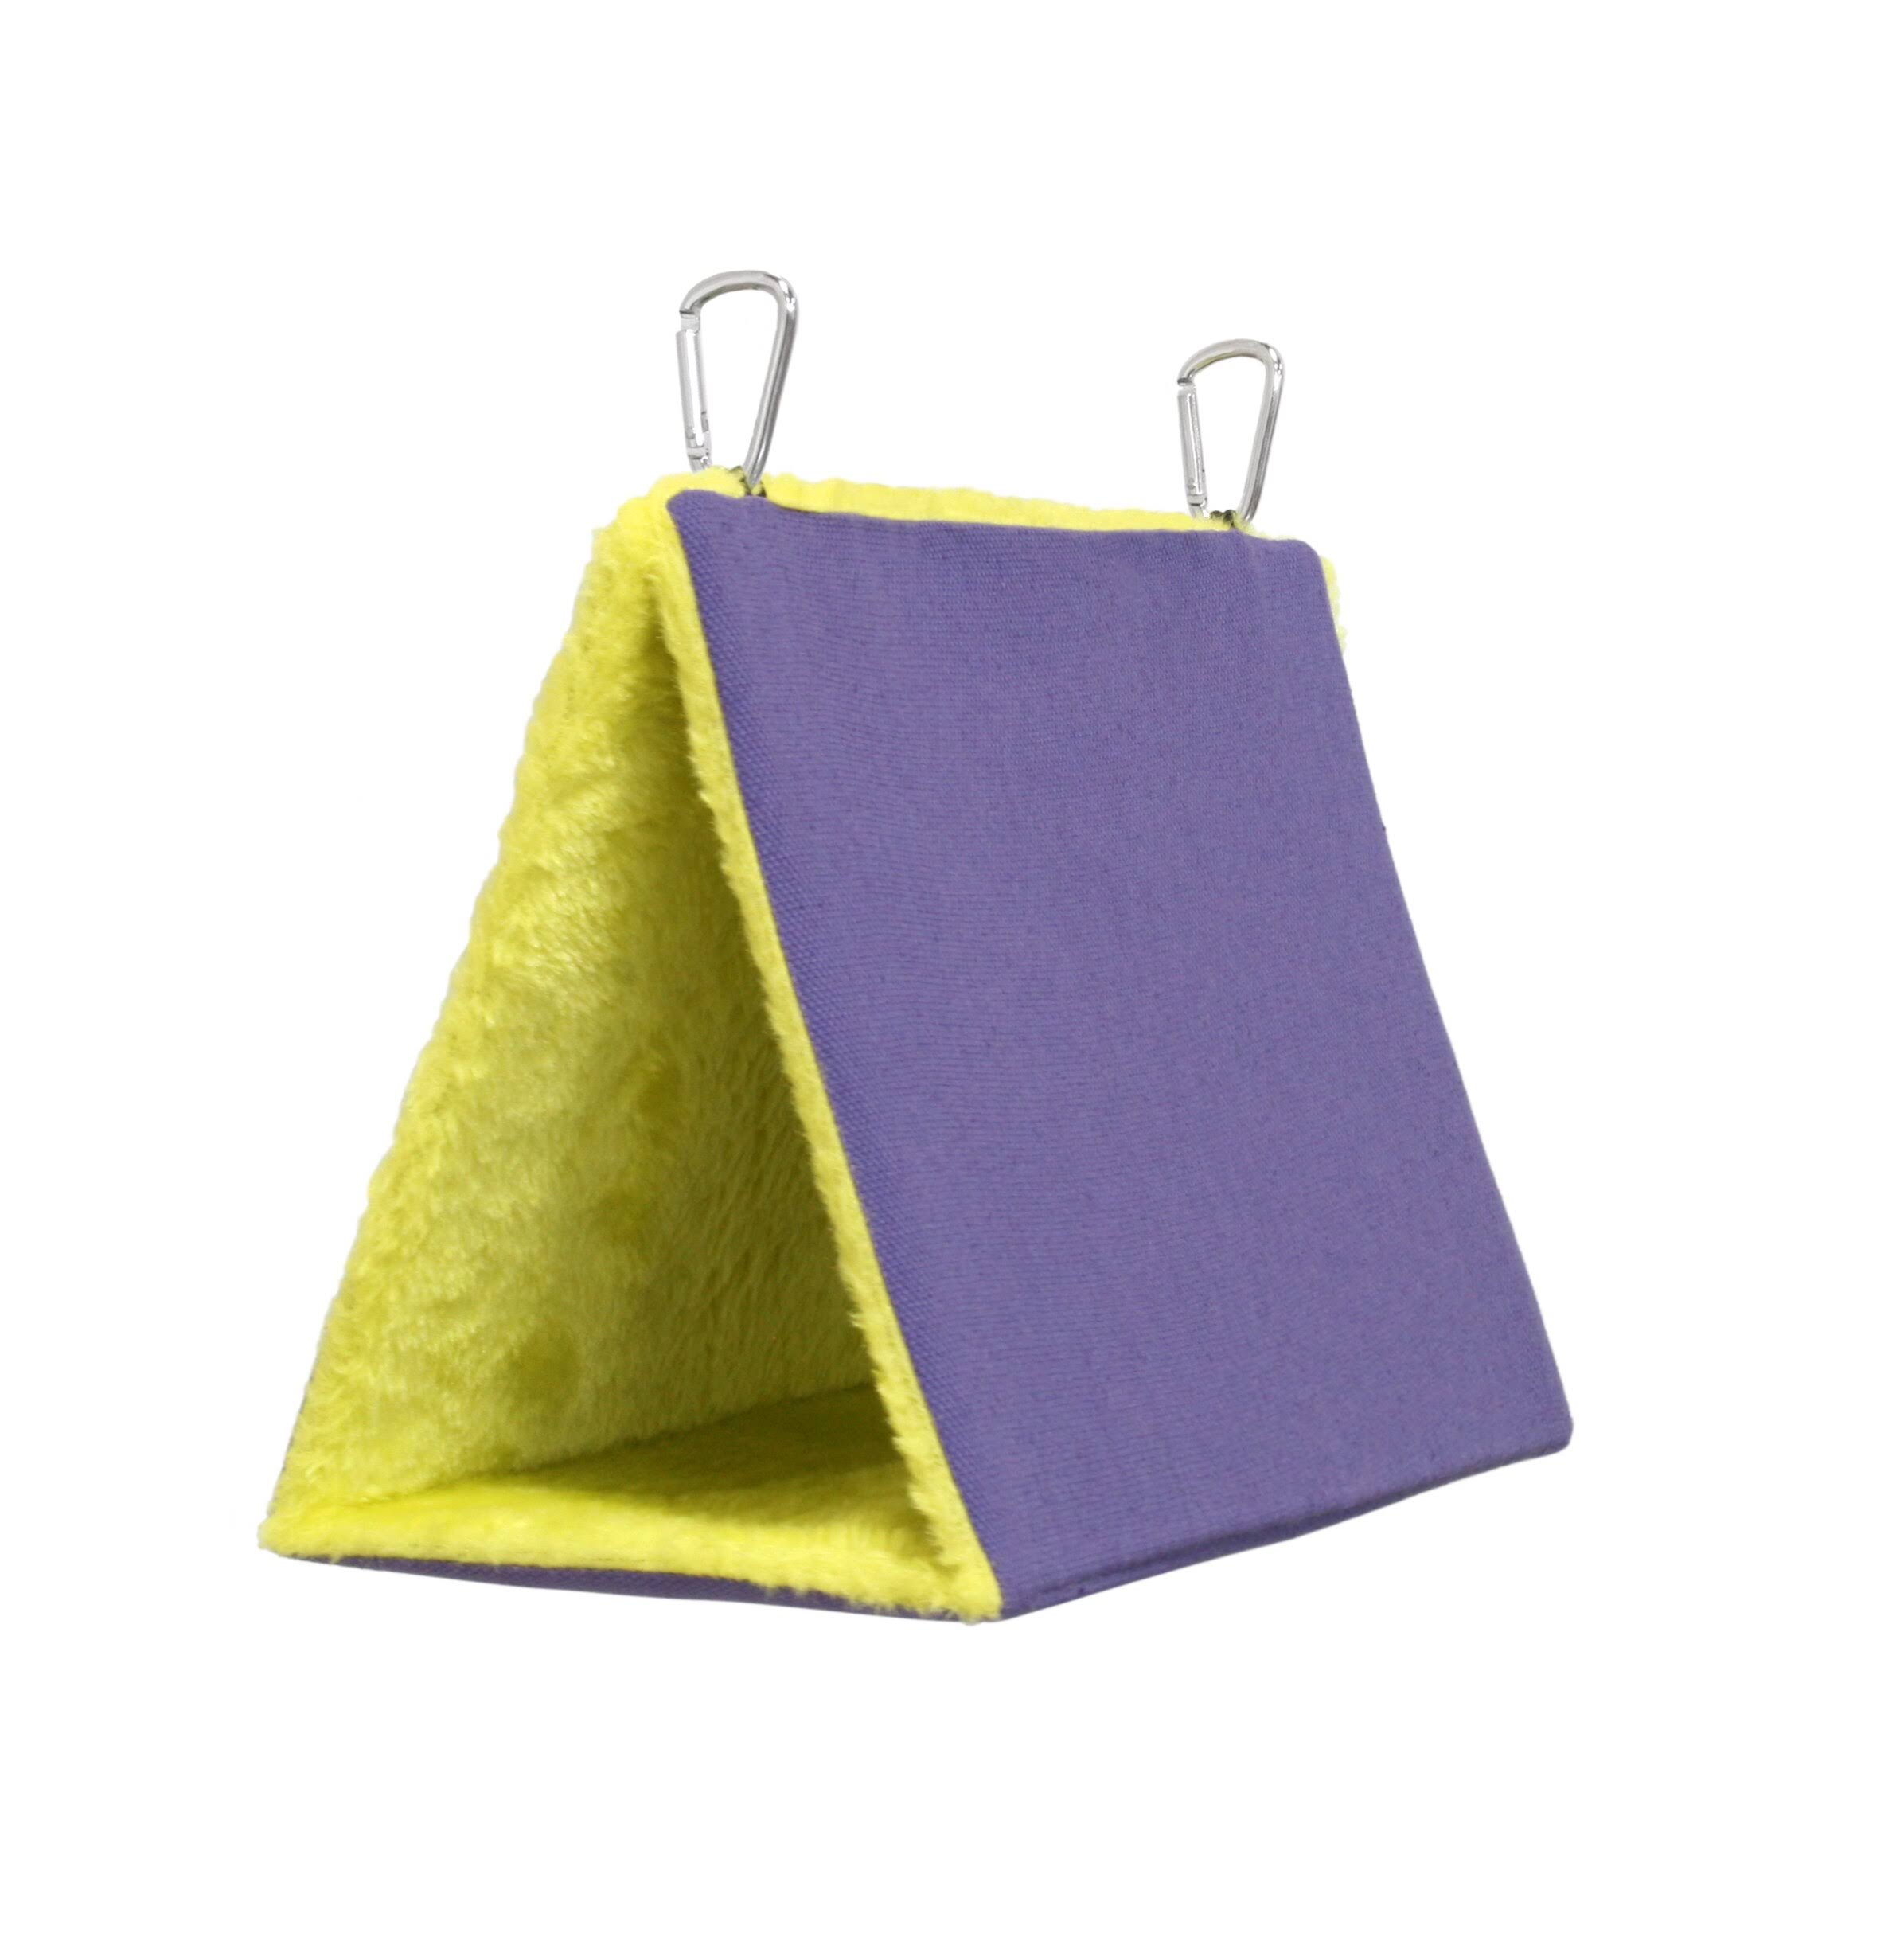 Prevue Pet 25cm Purple Snuggle Hut - 1164P | Best Price Guarantee | Delivery guaranteed | 30 Day Money Back Guarantee